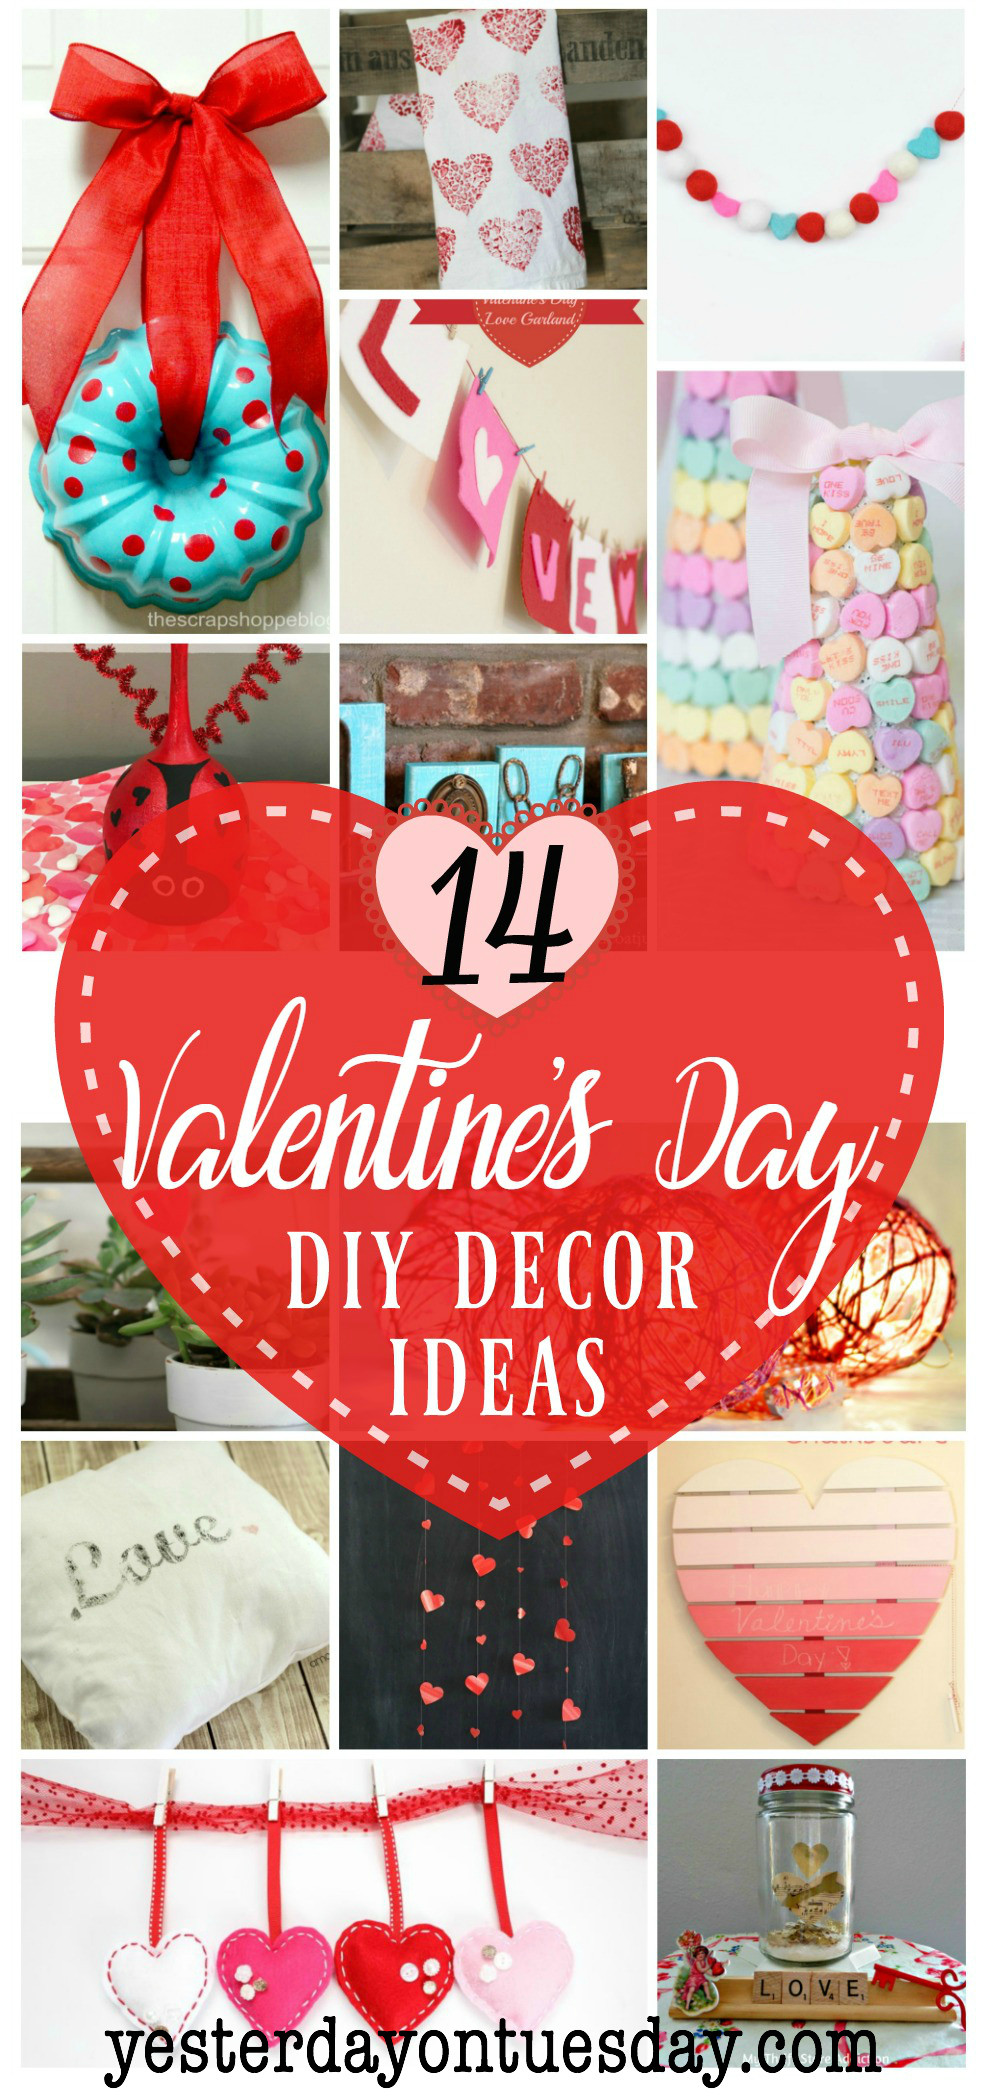 Valentines Day Pic Ideas
 14 Valentine s Day Decor Ideas